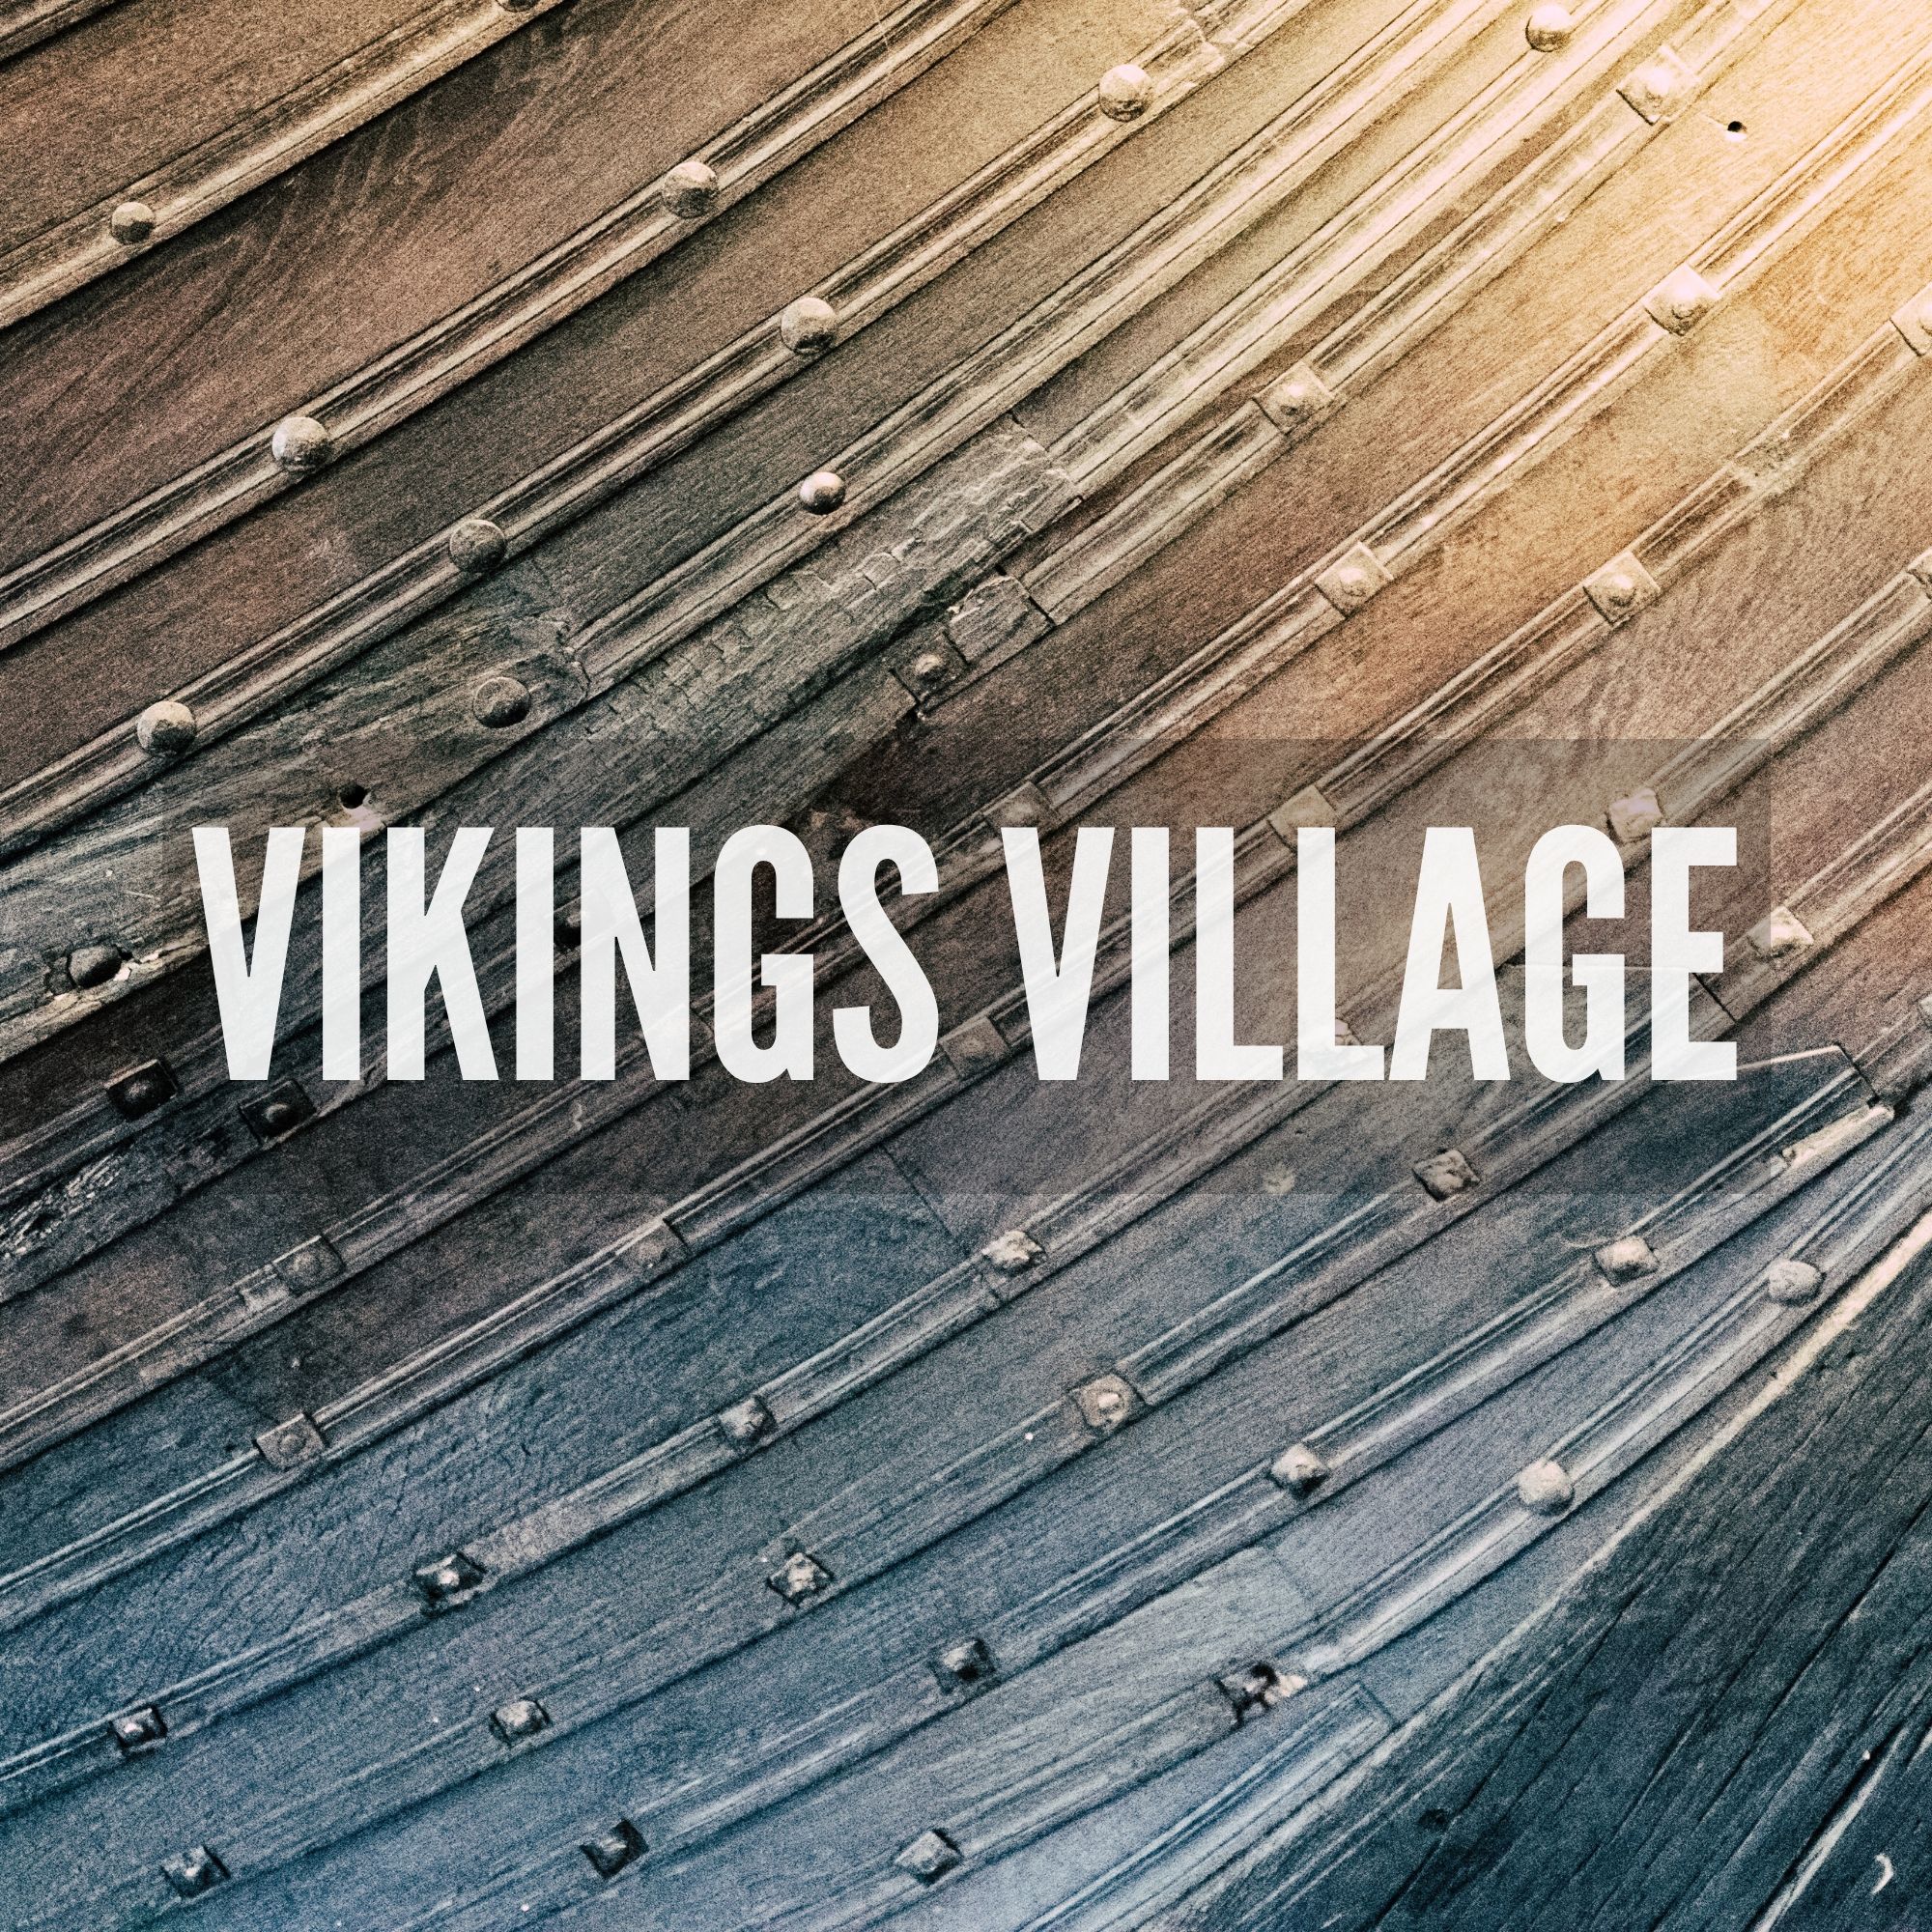 Vikings Village